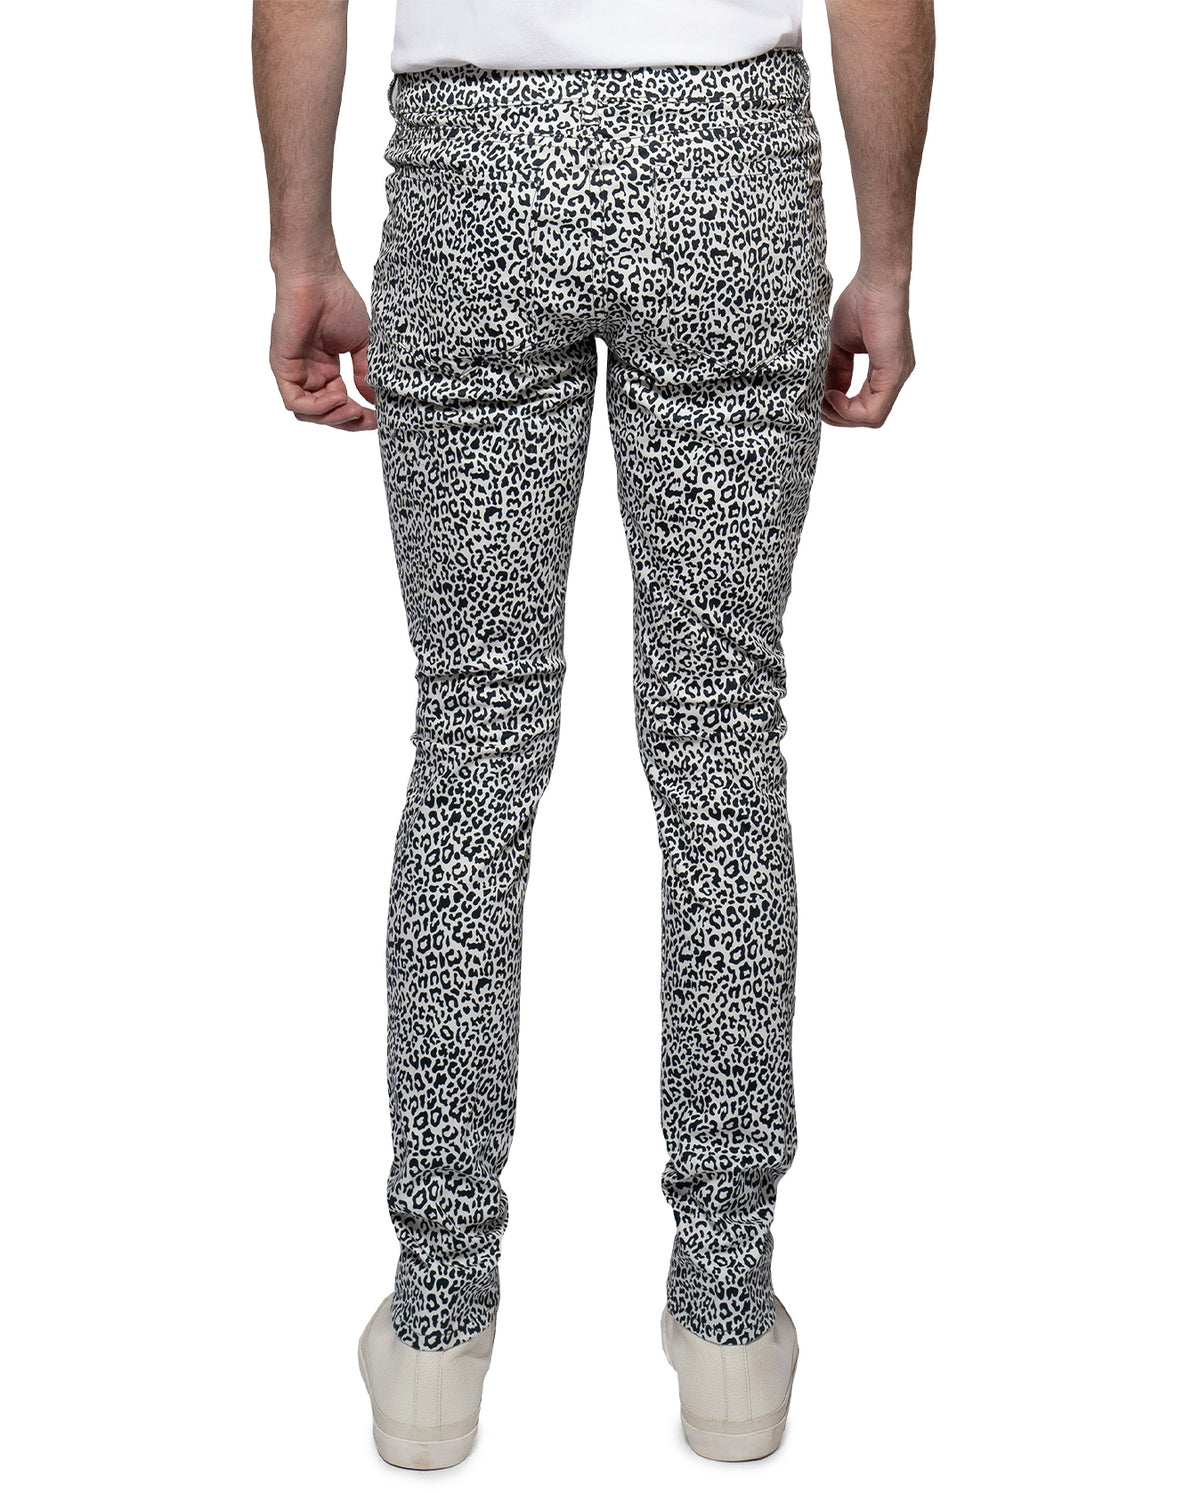 Greyson Black/White Leopard Skinny Jean